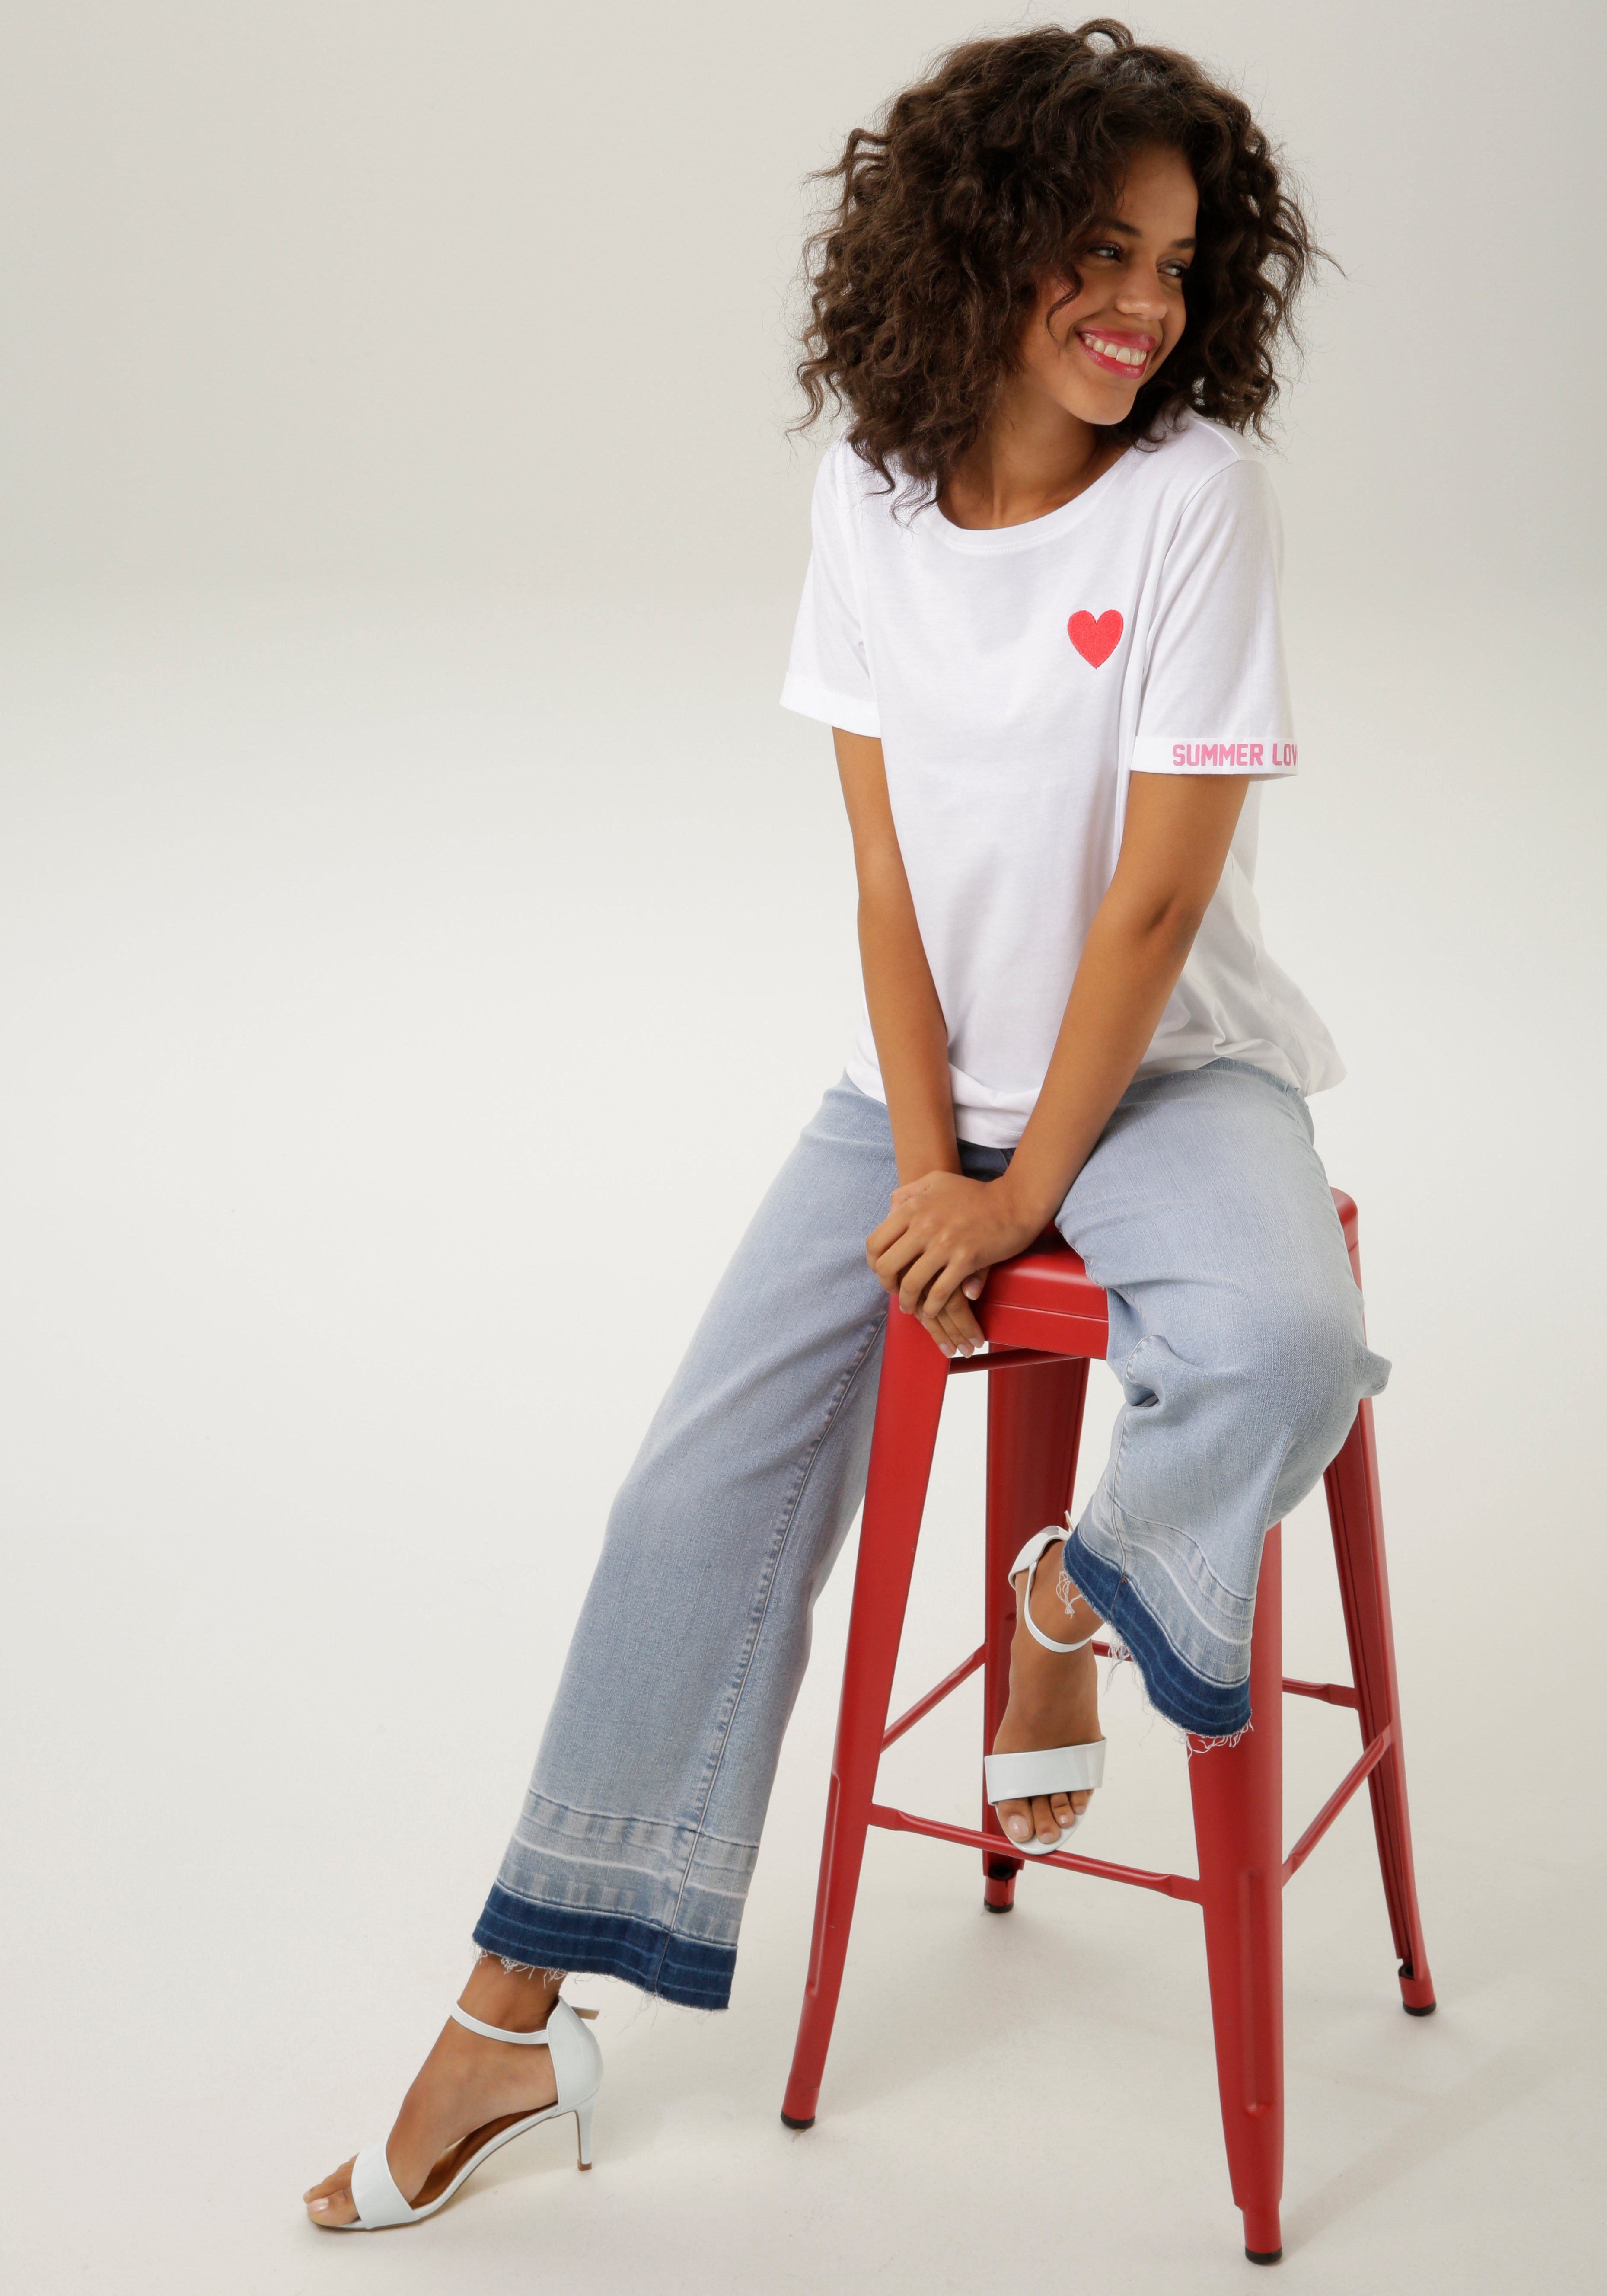 Aniston CASUAL Straight-Jeans mit trendiger leicht ausgefranstem Saum used bleached Waschung am